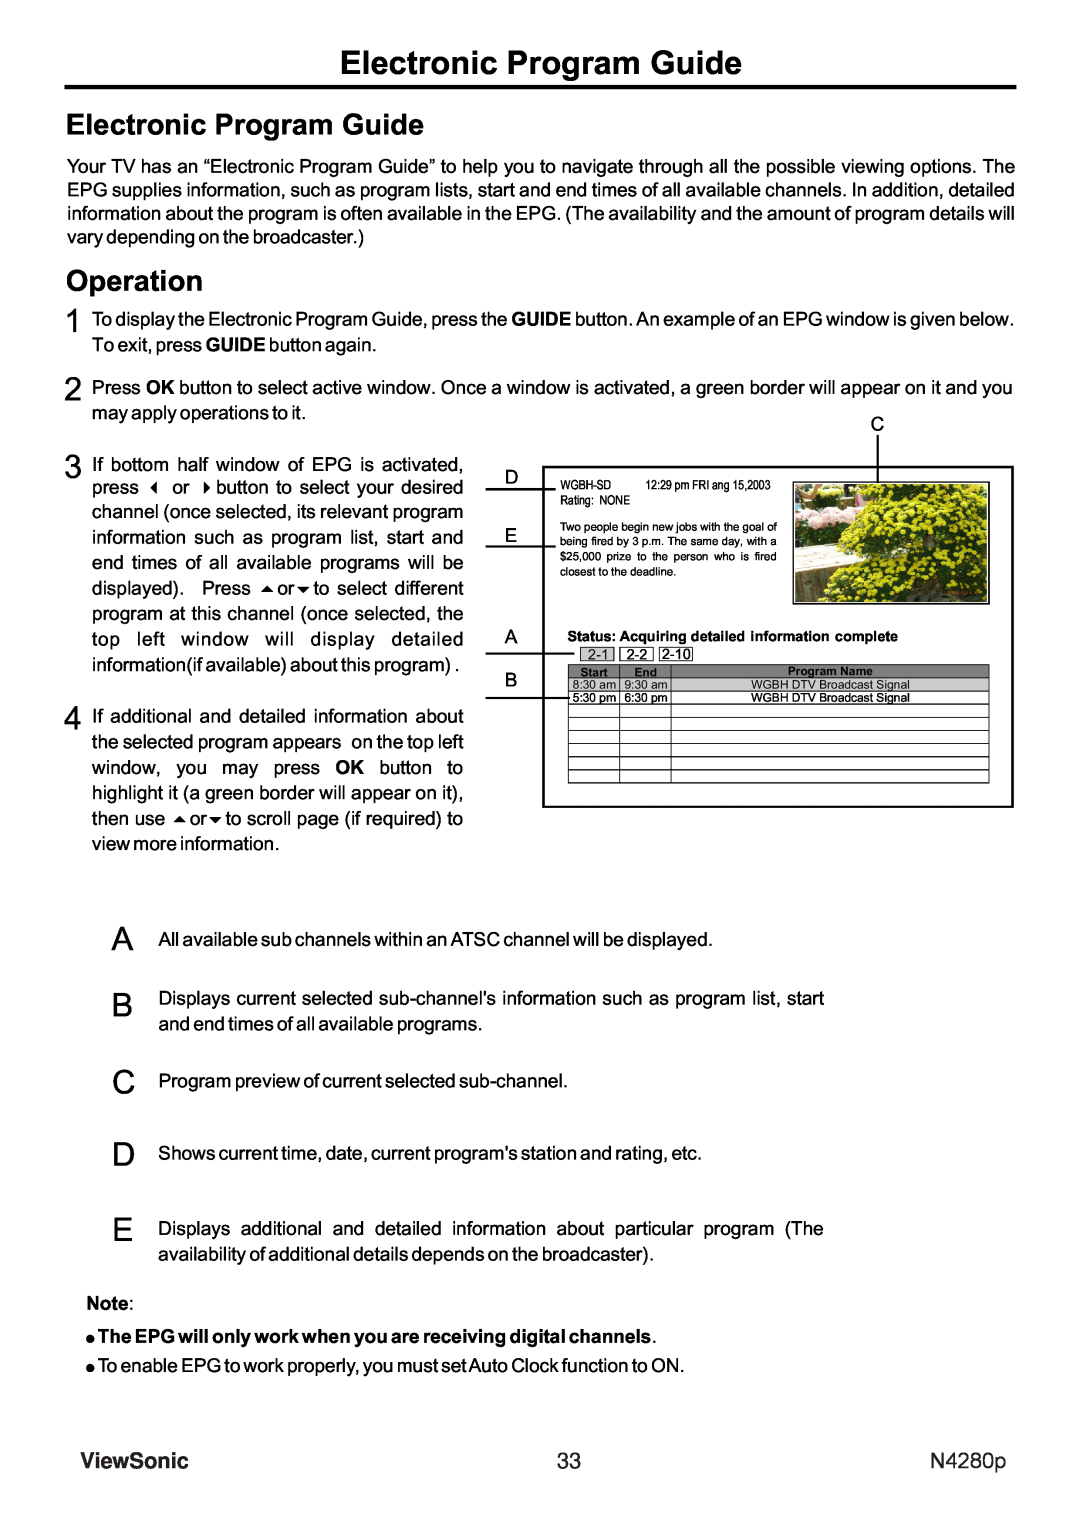 ViewSonic N4280p manual Electronic Program Guide, Operation, A B C D E, ViewSonic 